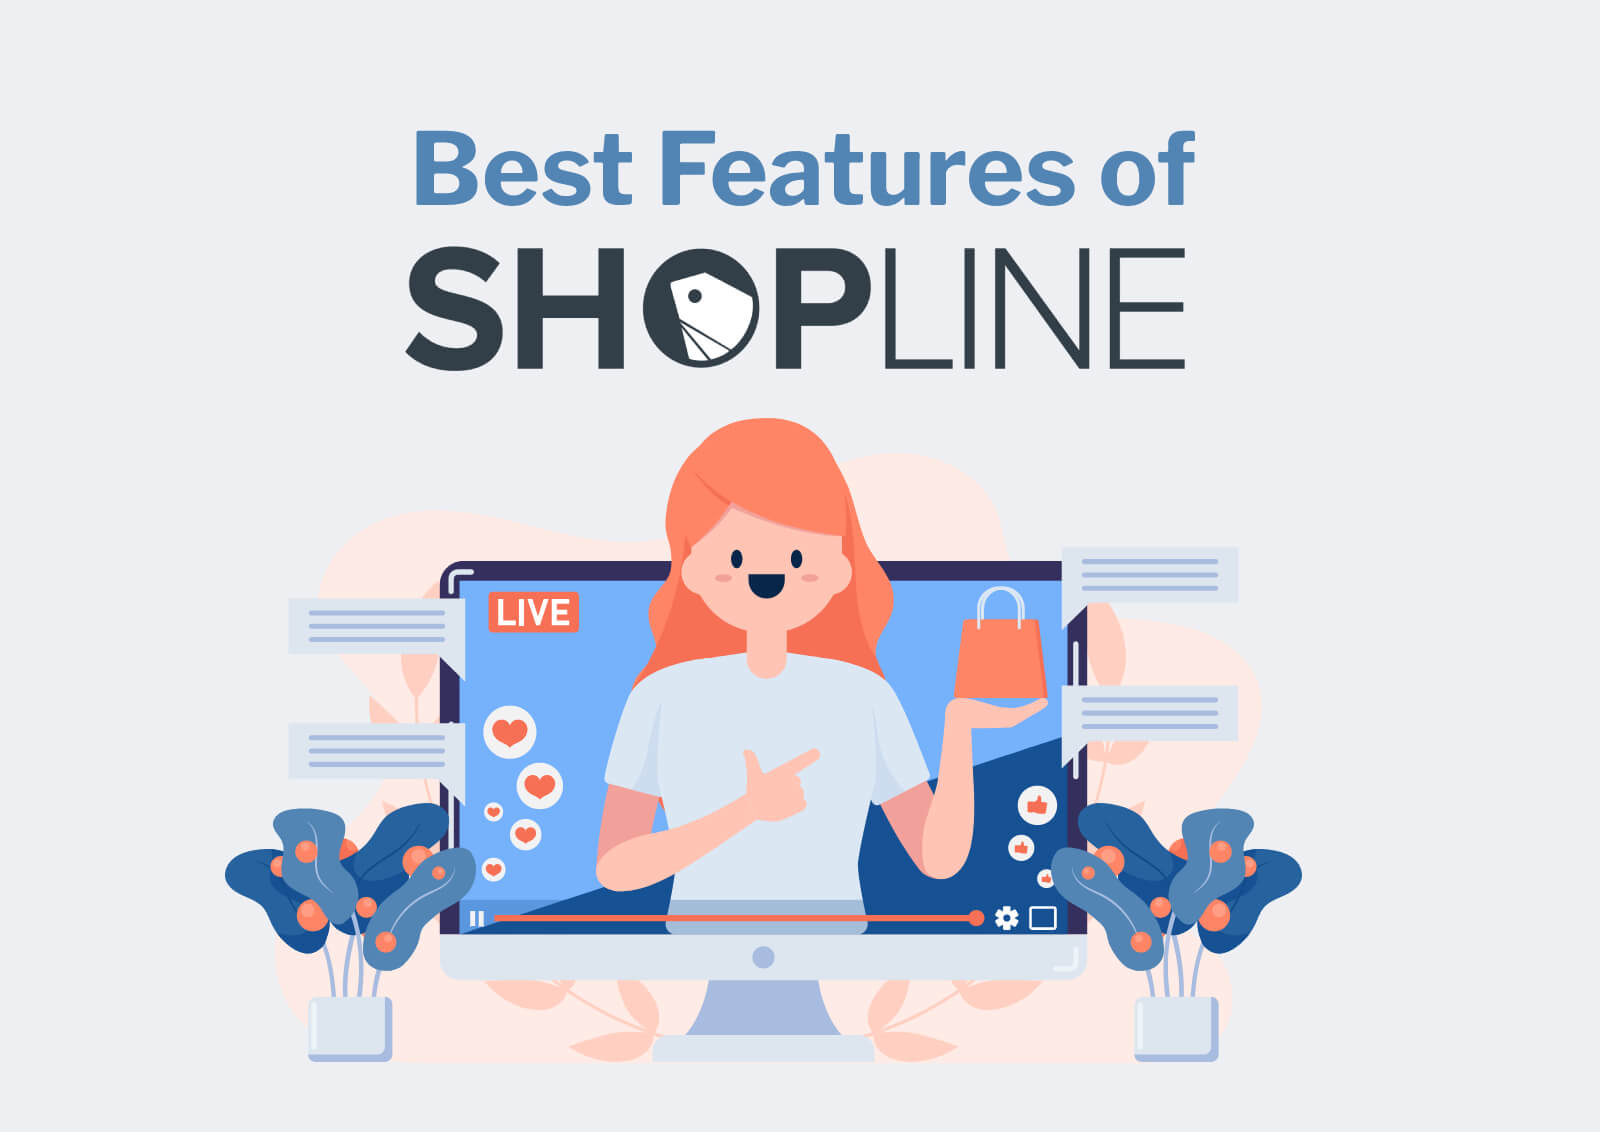 ecommerce platform shopline